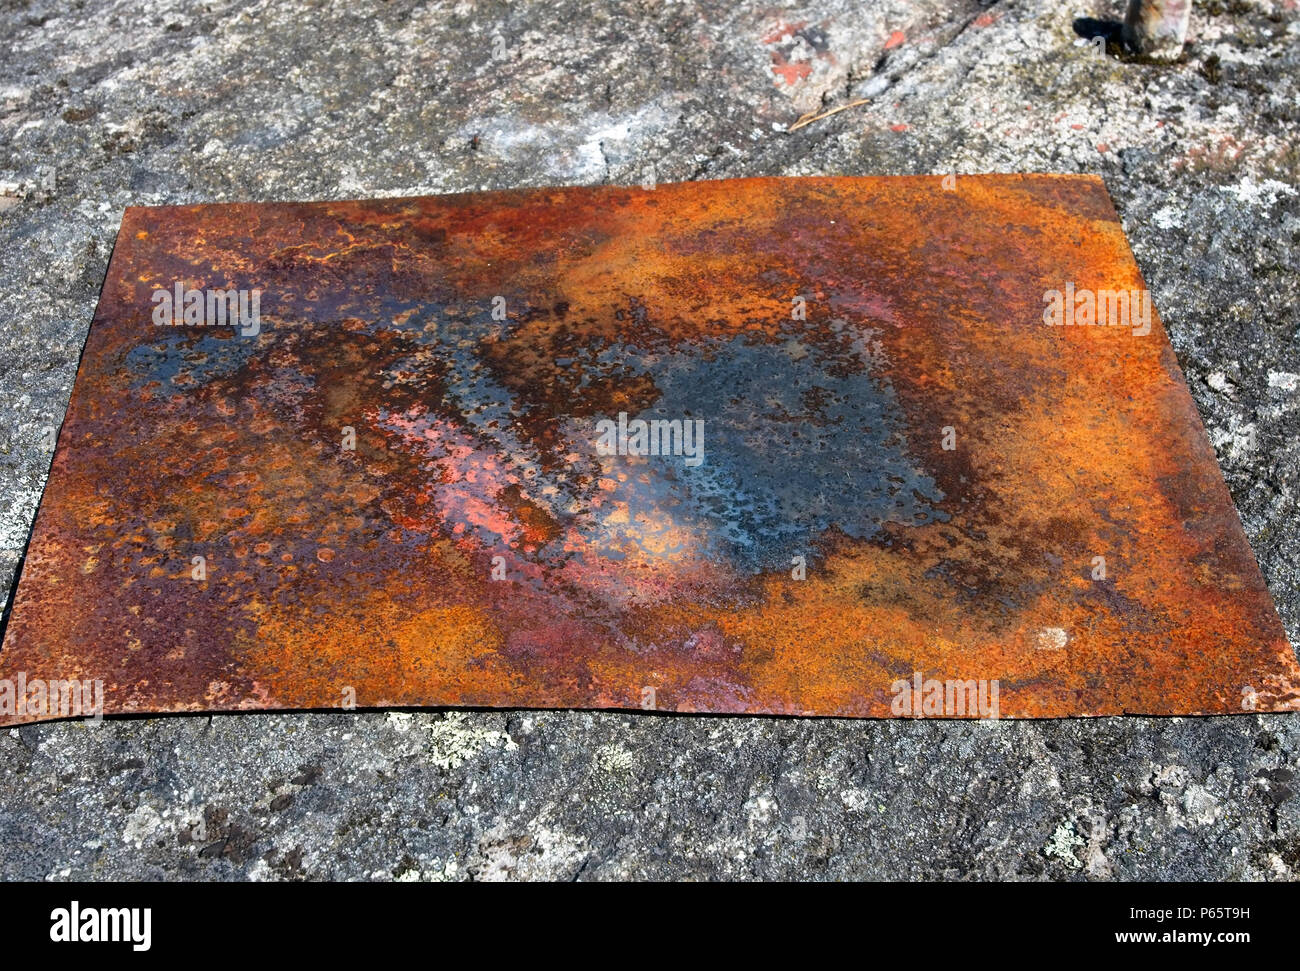 rusty metal plate on ground Stock Photo